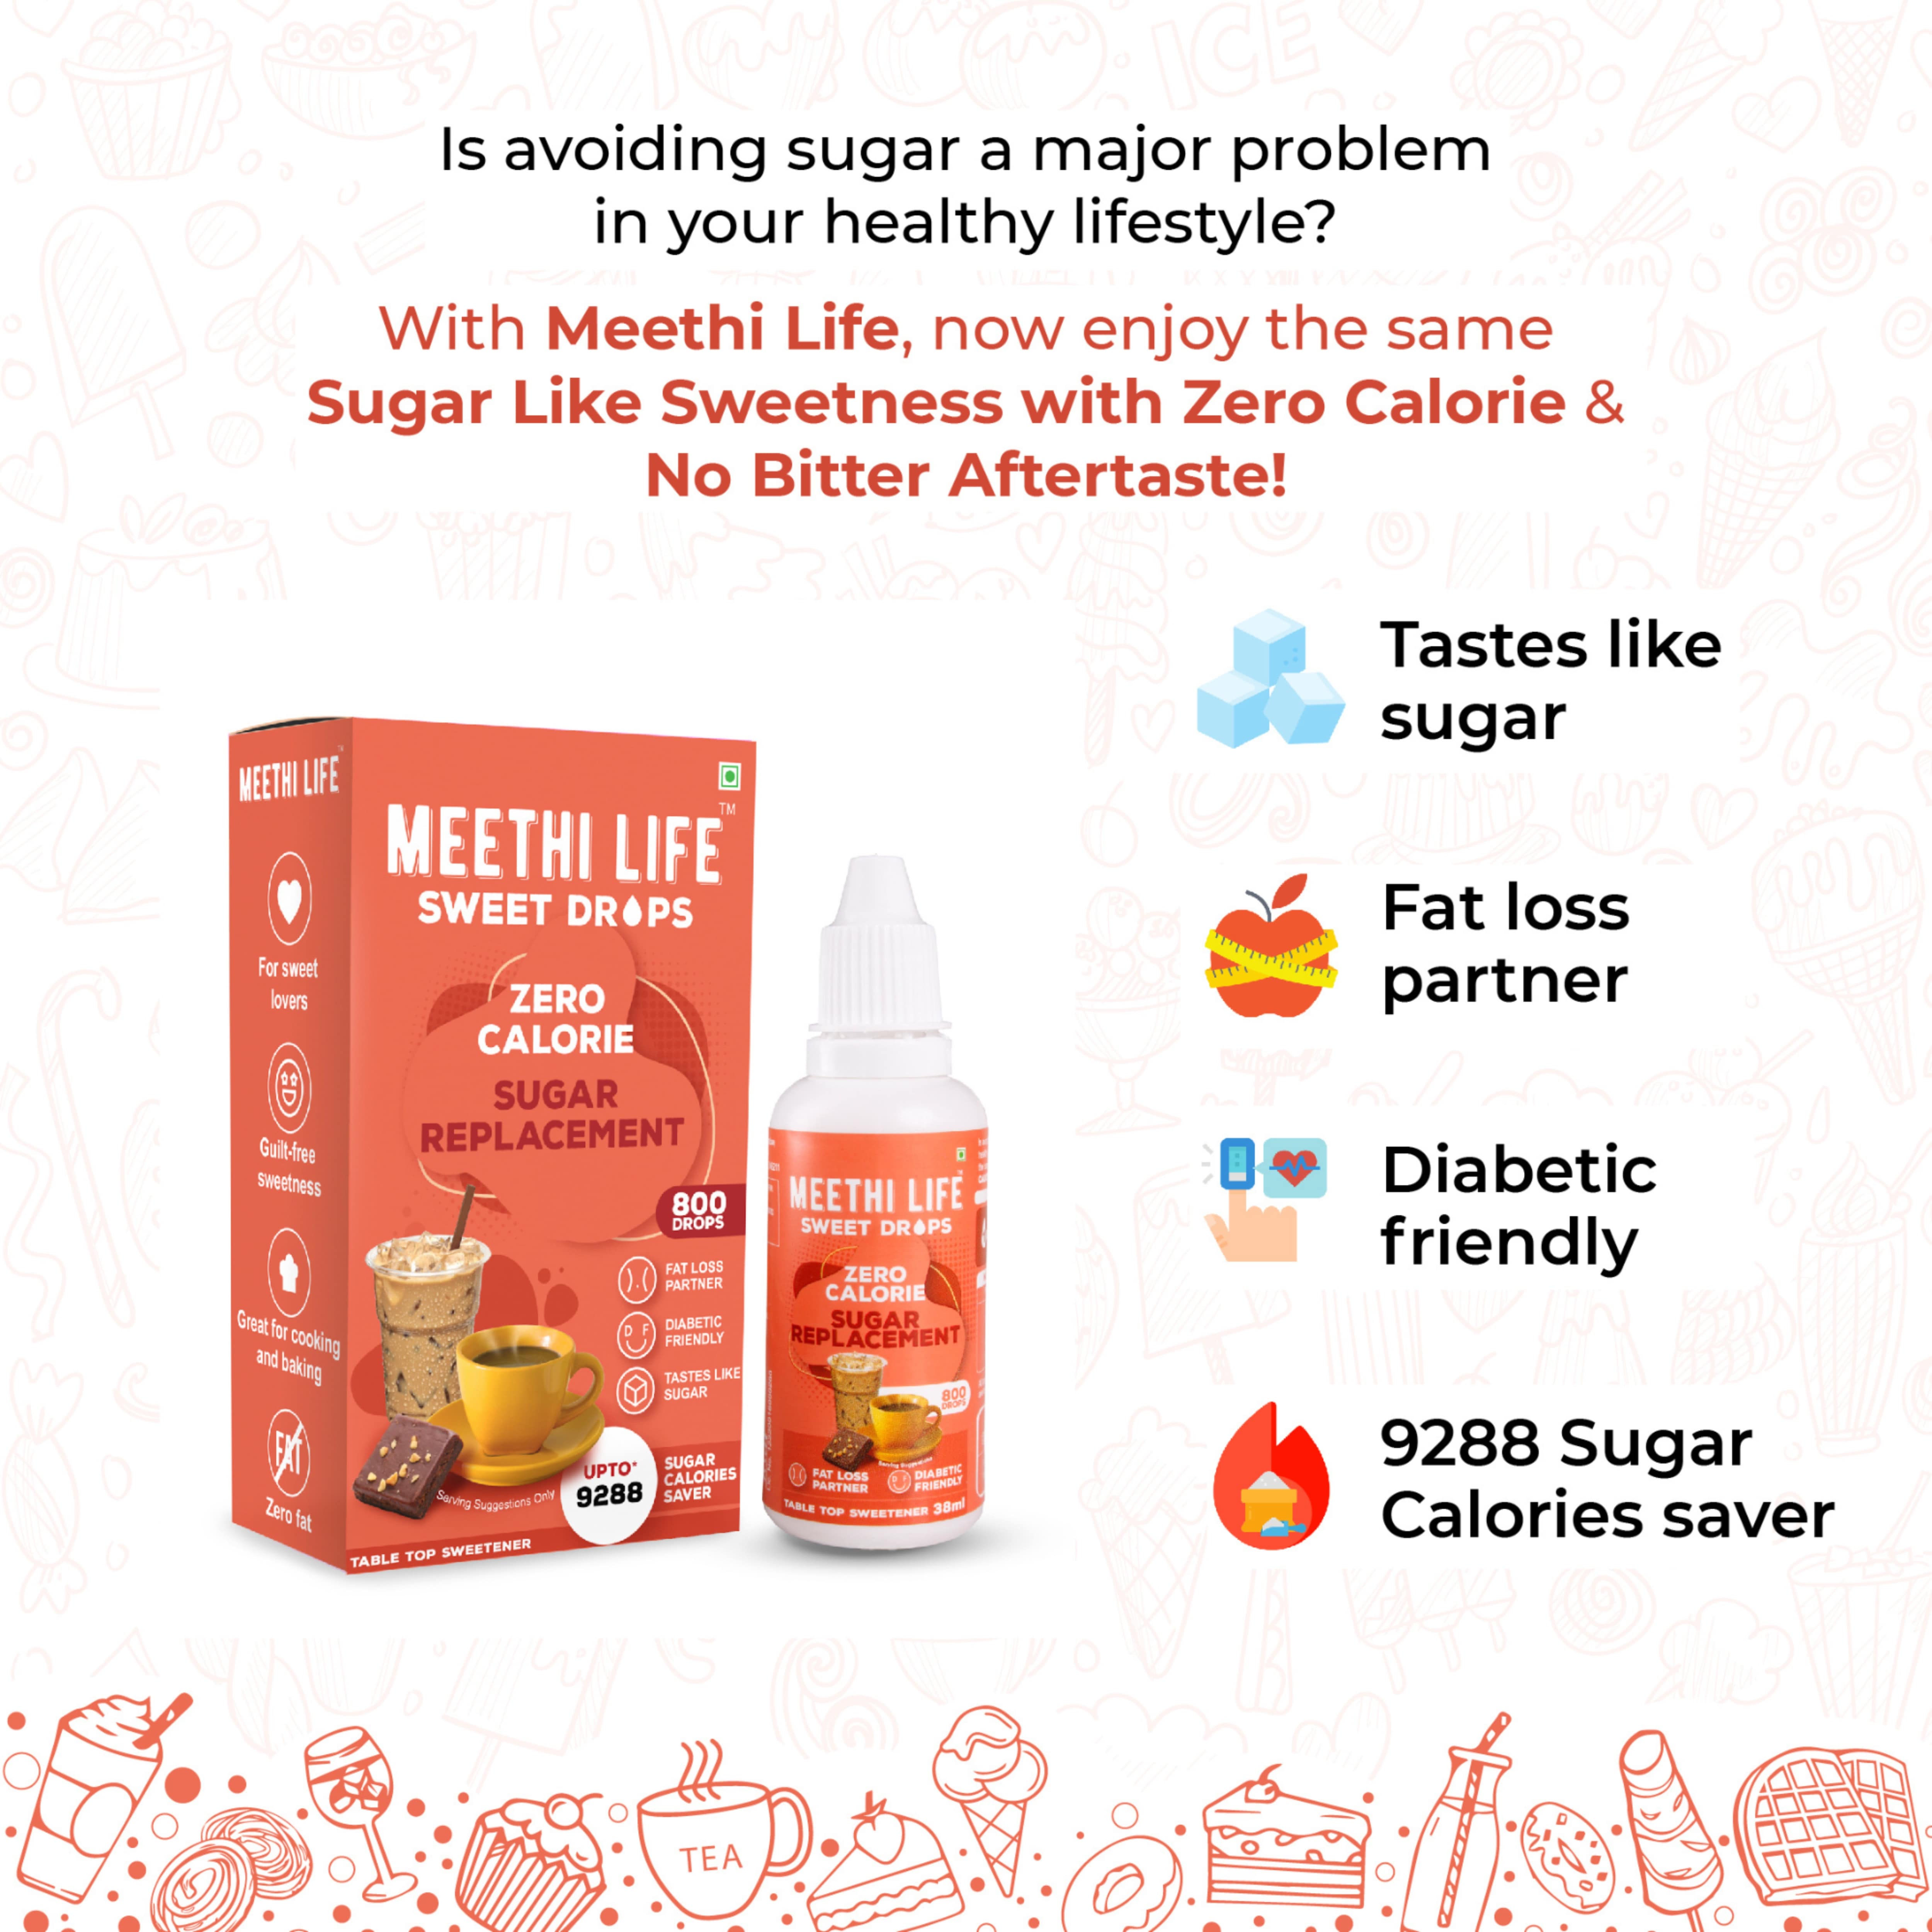 Meethi Life - Zero Calorie Sugar Substitute/Replacement, Diabetic Friendly, Fat Loss Partner, No Sugar, Guiltfree Sweetener, Sucralose based Sugar Free 800 Drops